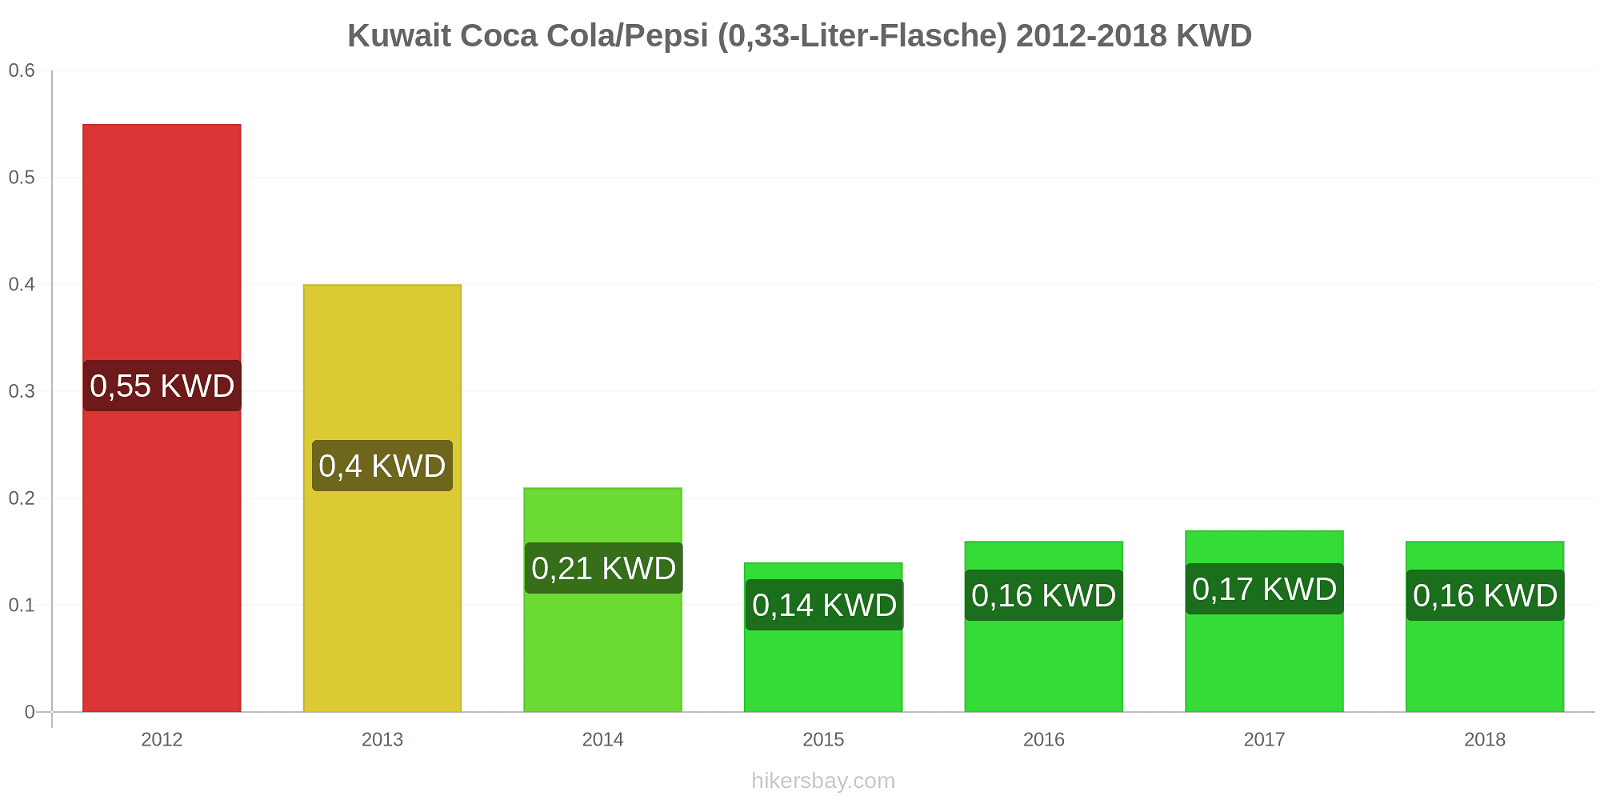 Kuwait Preisänderungen Coke/Pepsi (0,33-Liter-Flasche) hikersbay.com